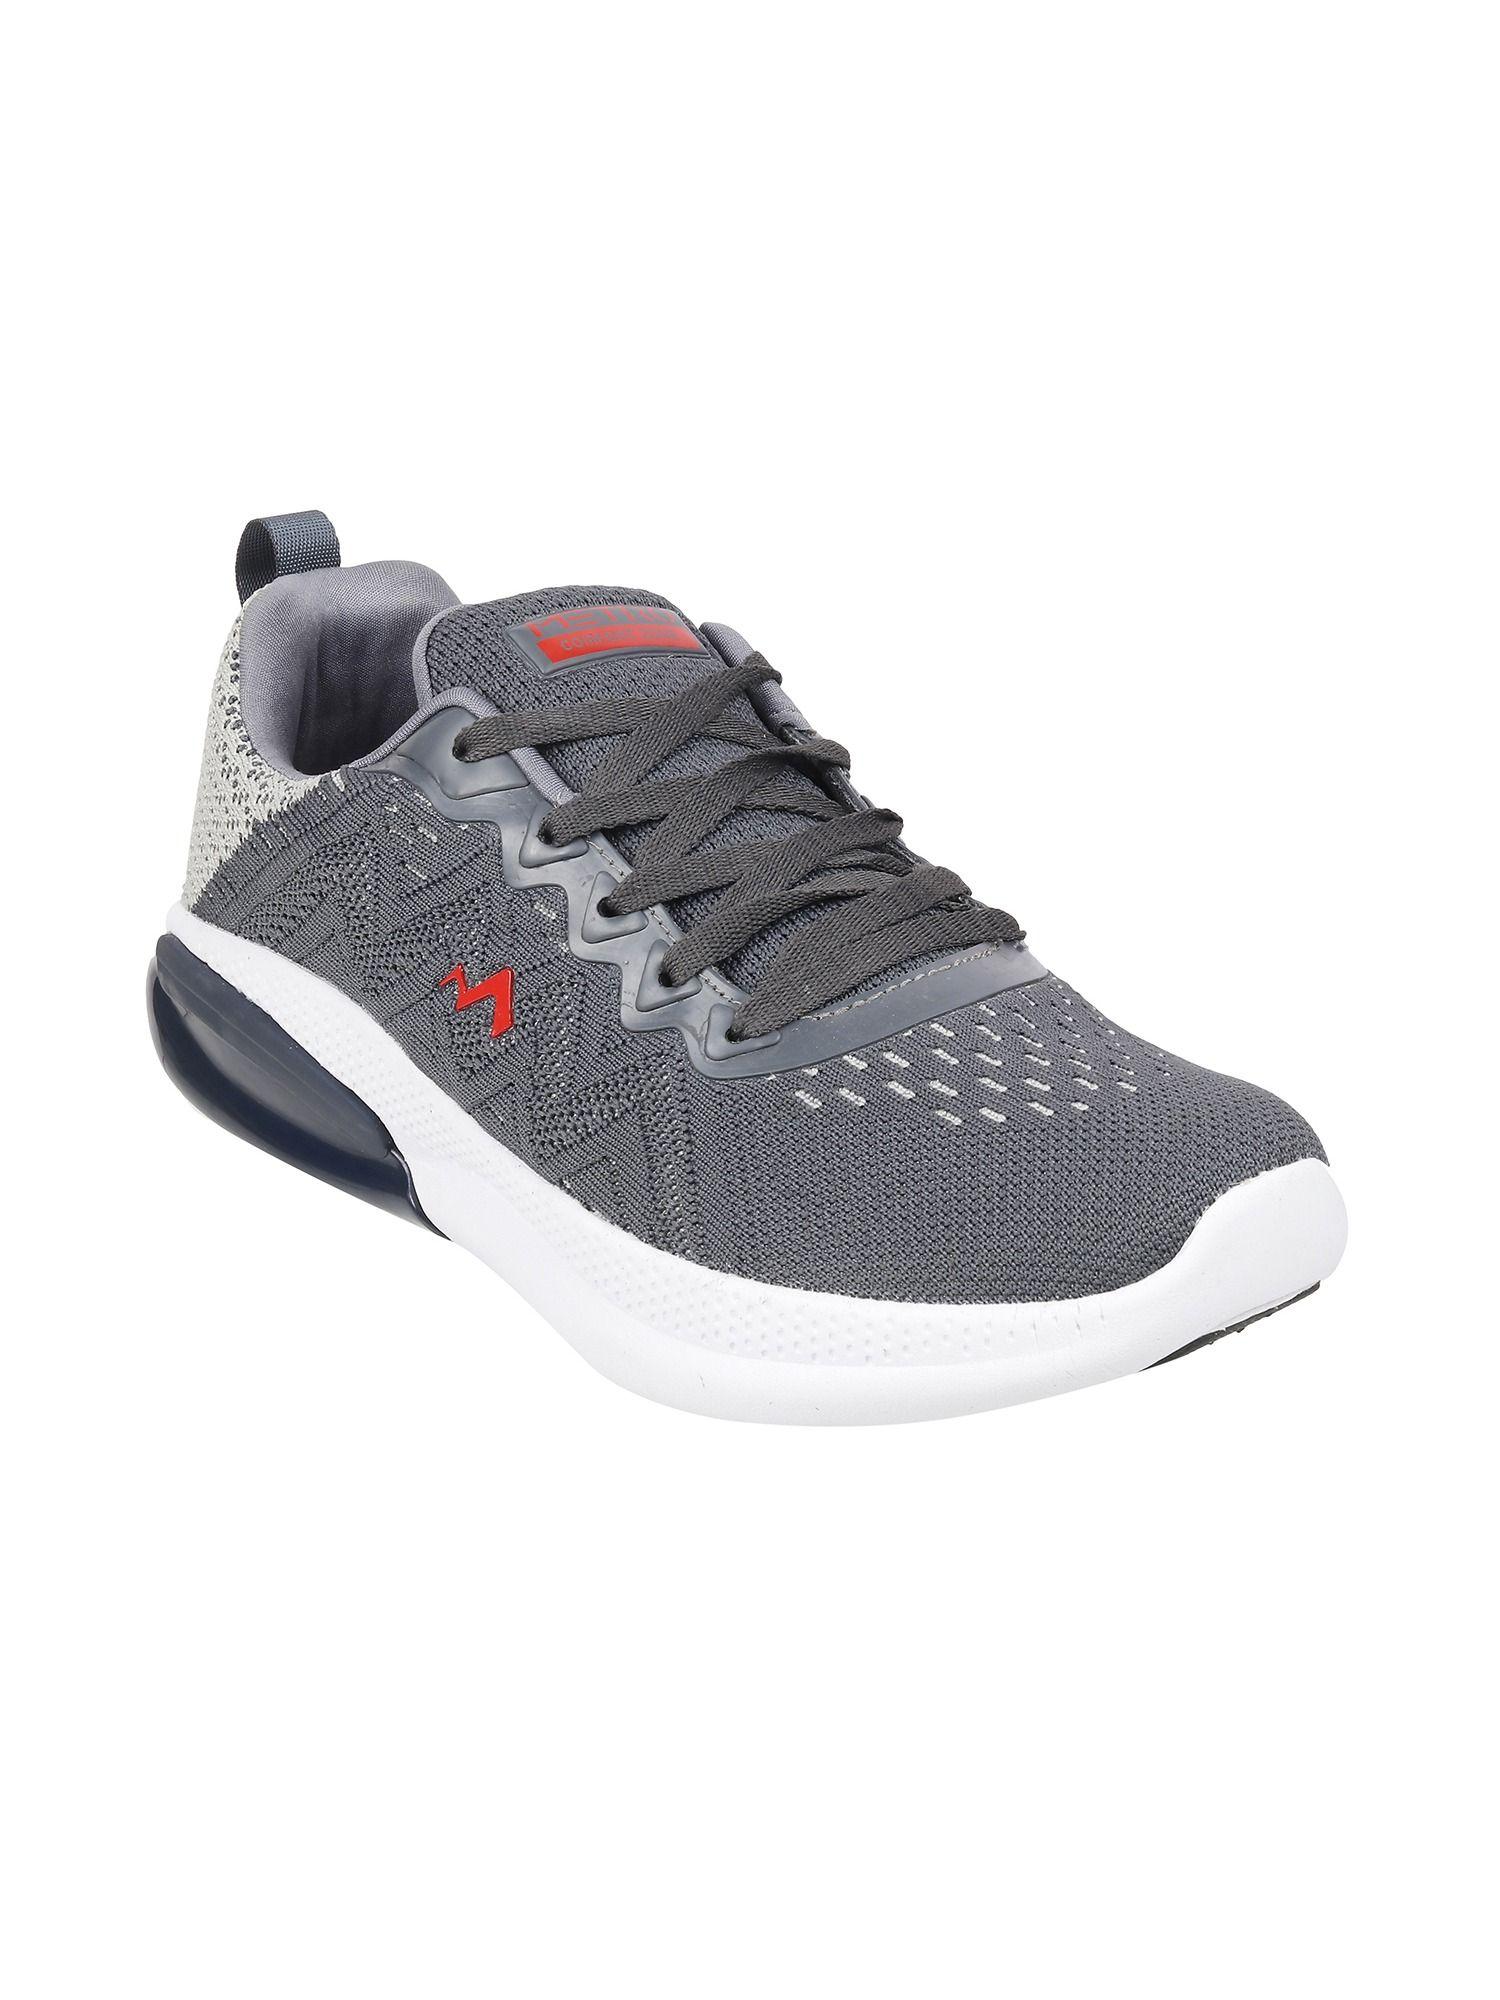 mens grey sports lace-ups shoesmetro woven grey running